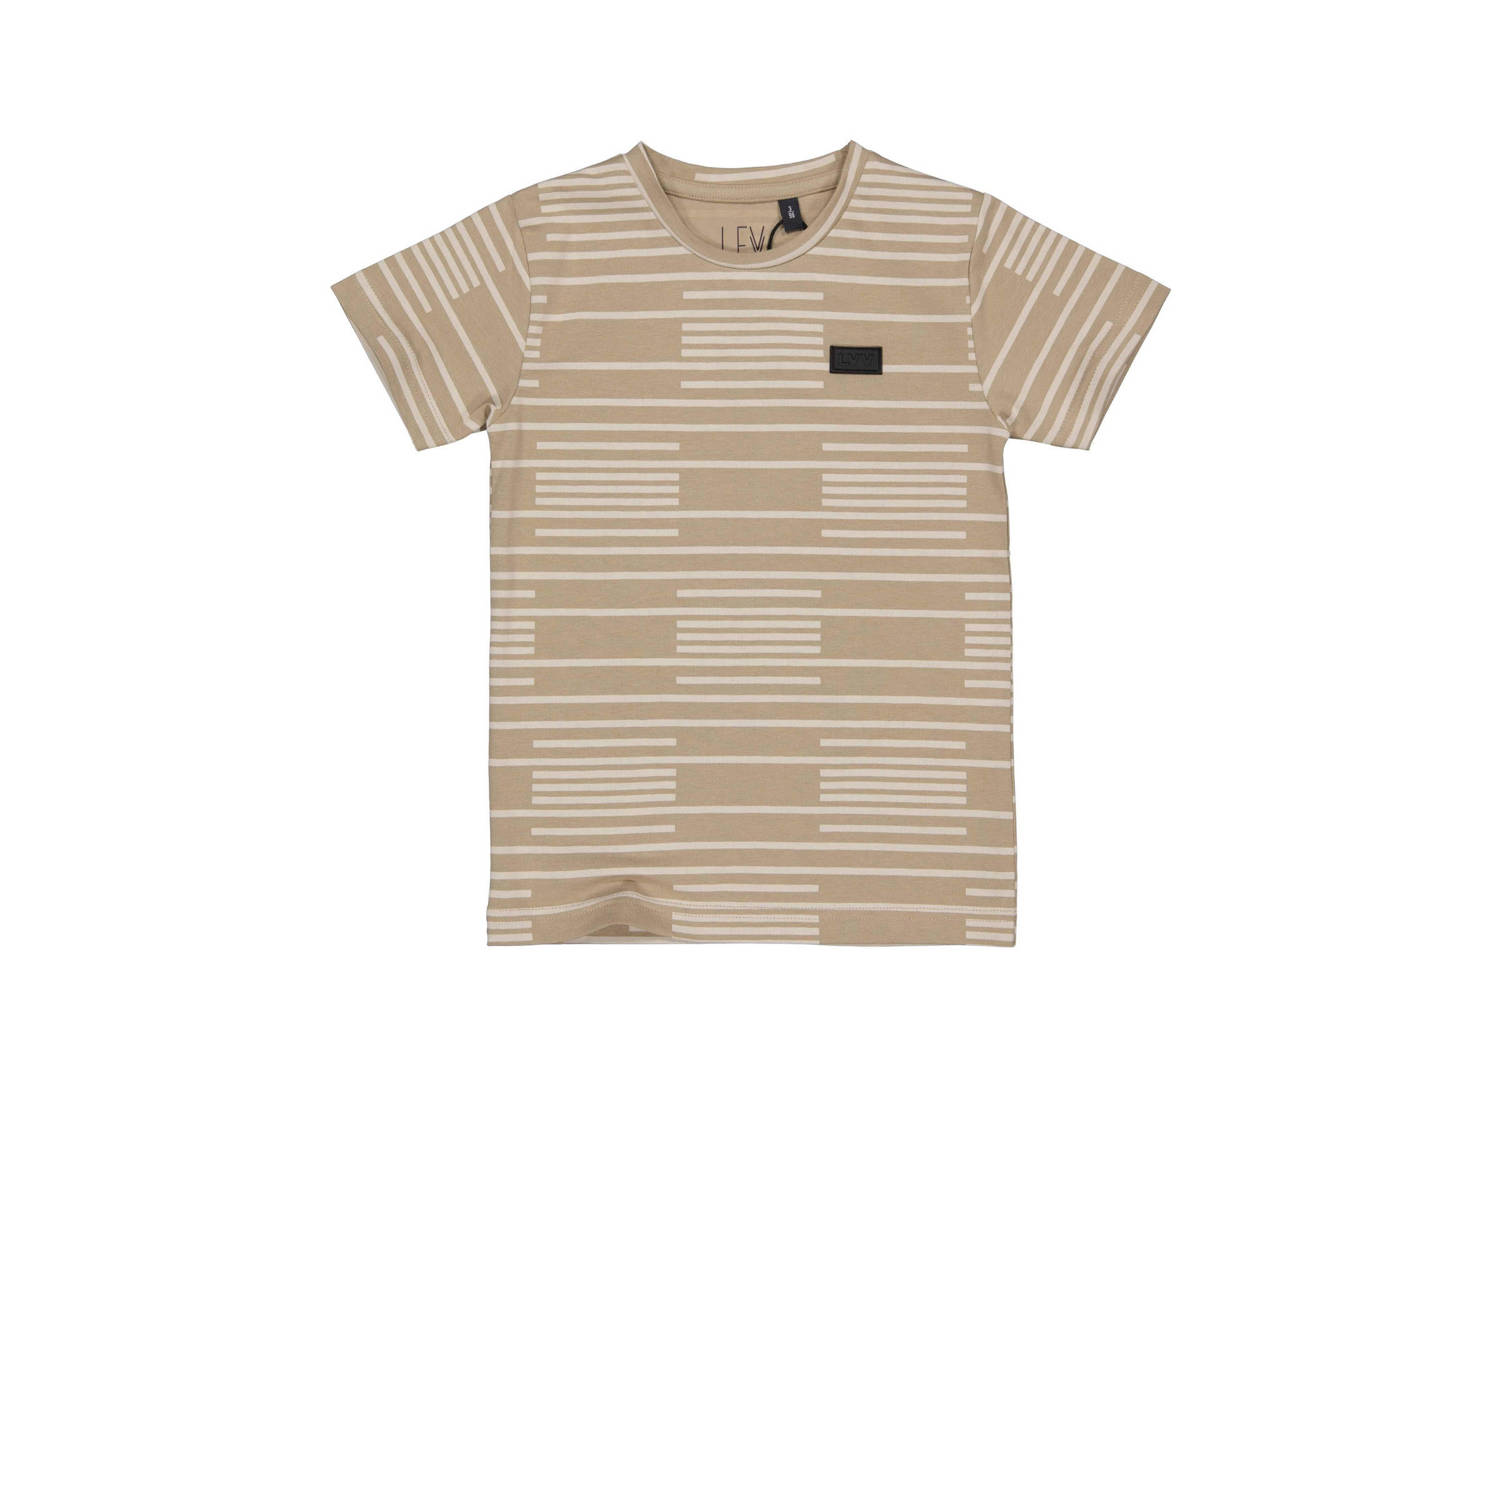 LEVV T-shirt MASON met all over print kameel wit